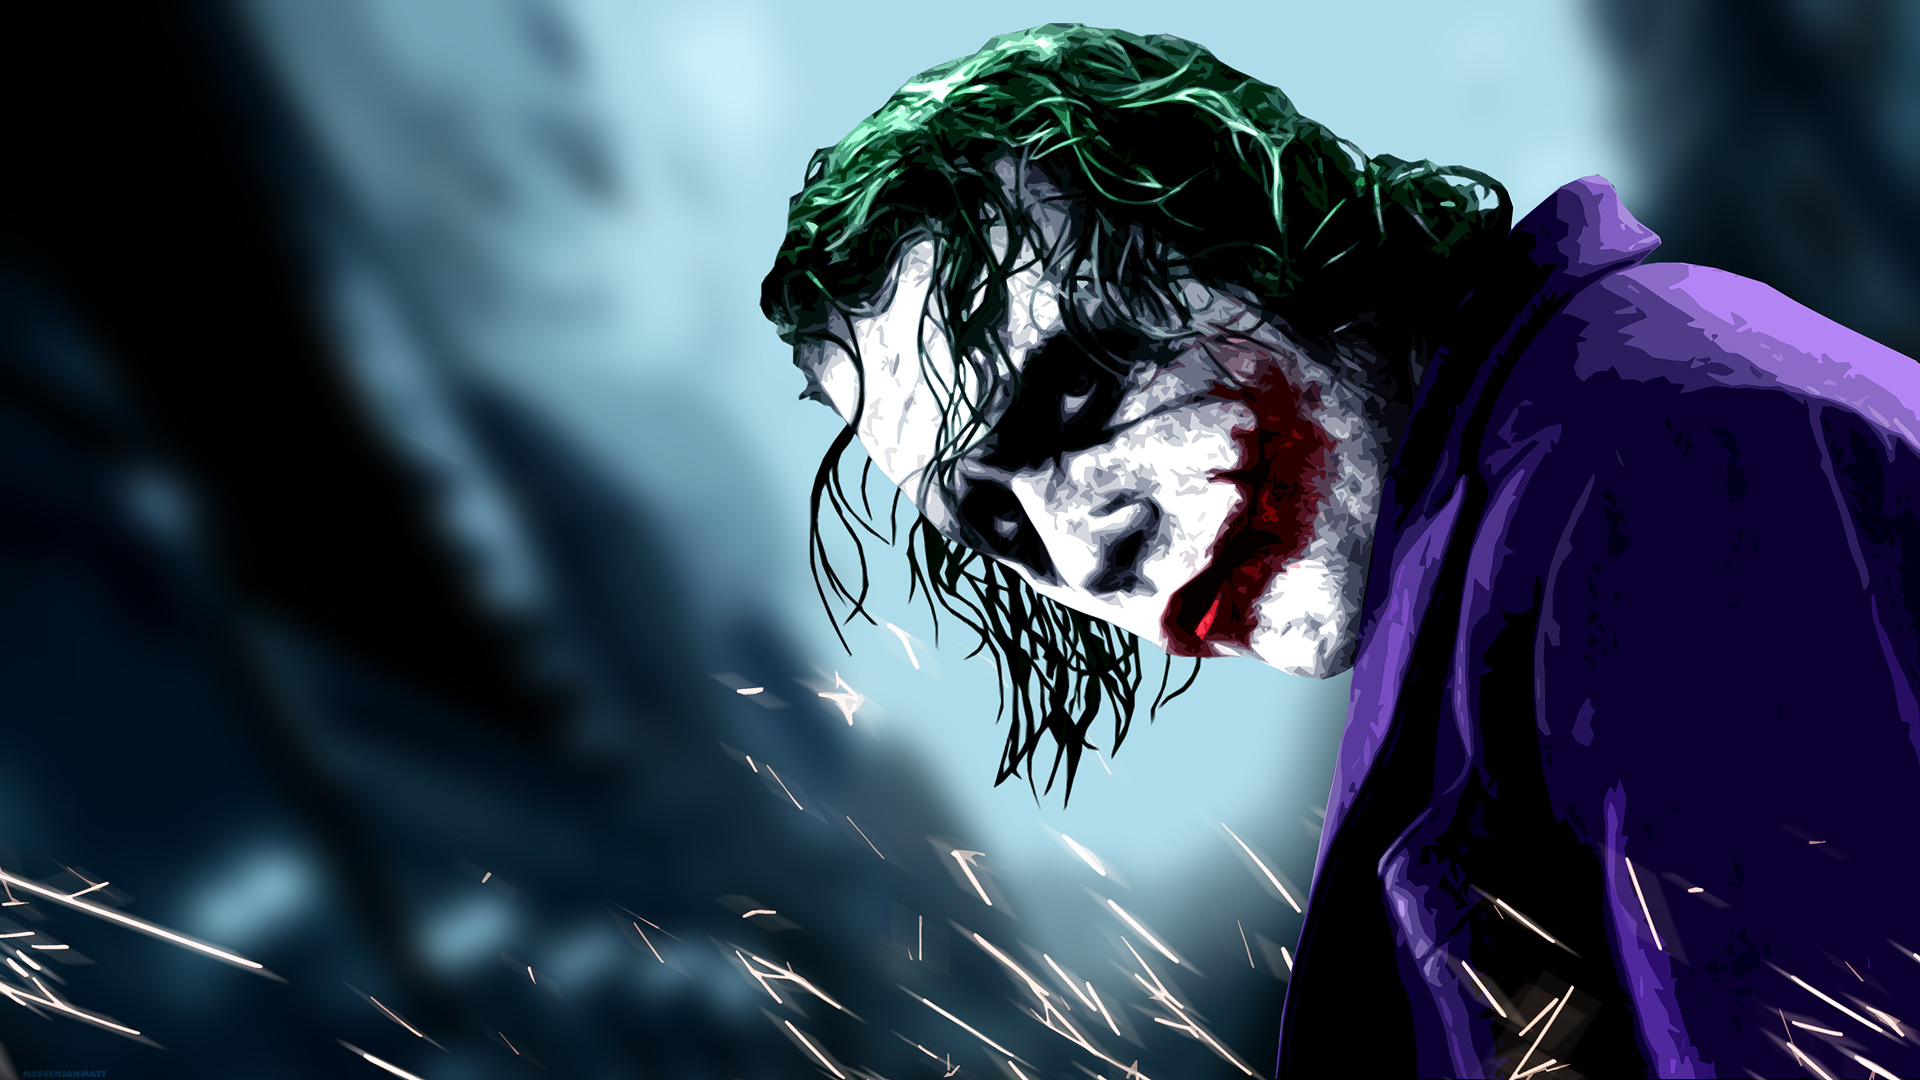 Joker HD Wallpaper Pictures Cool